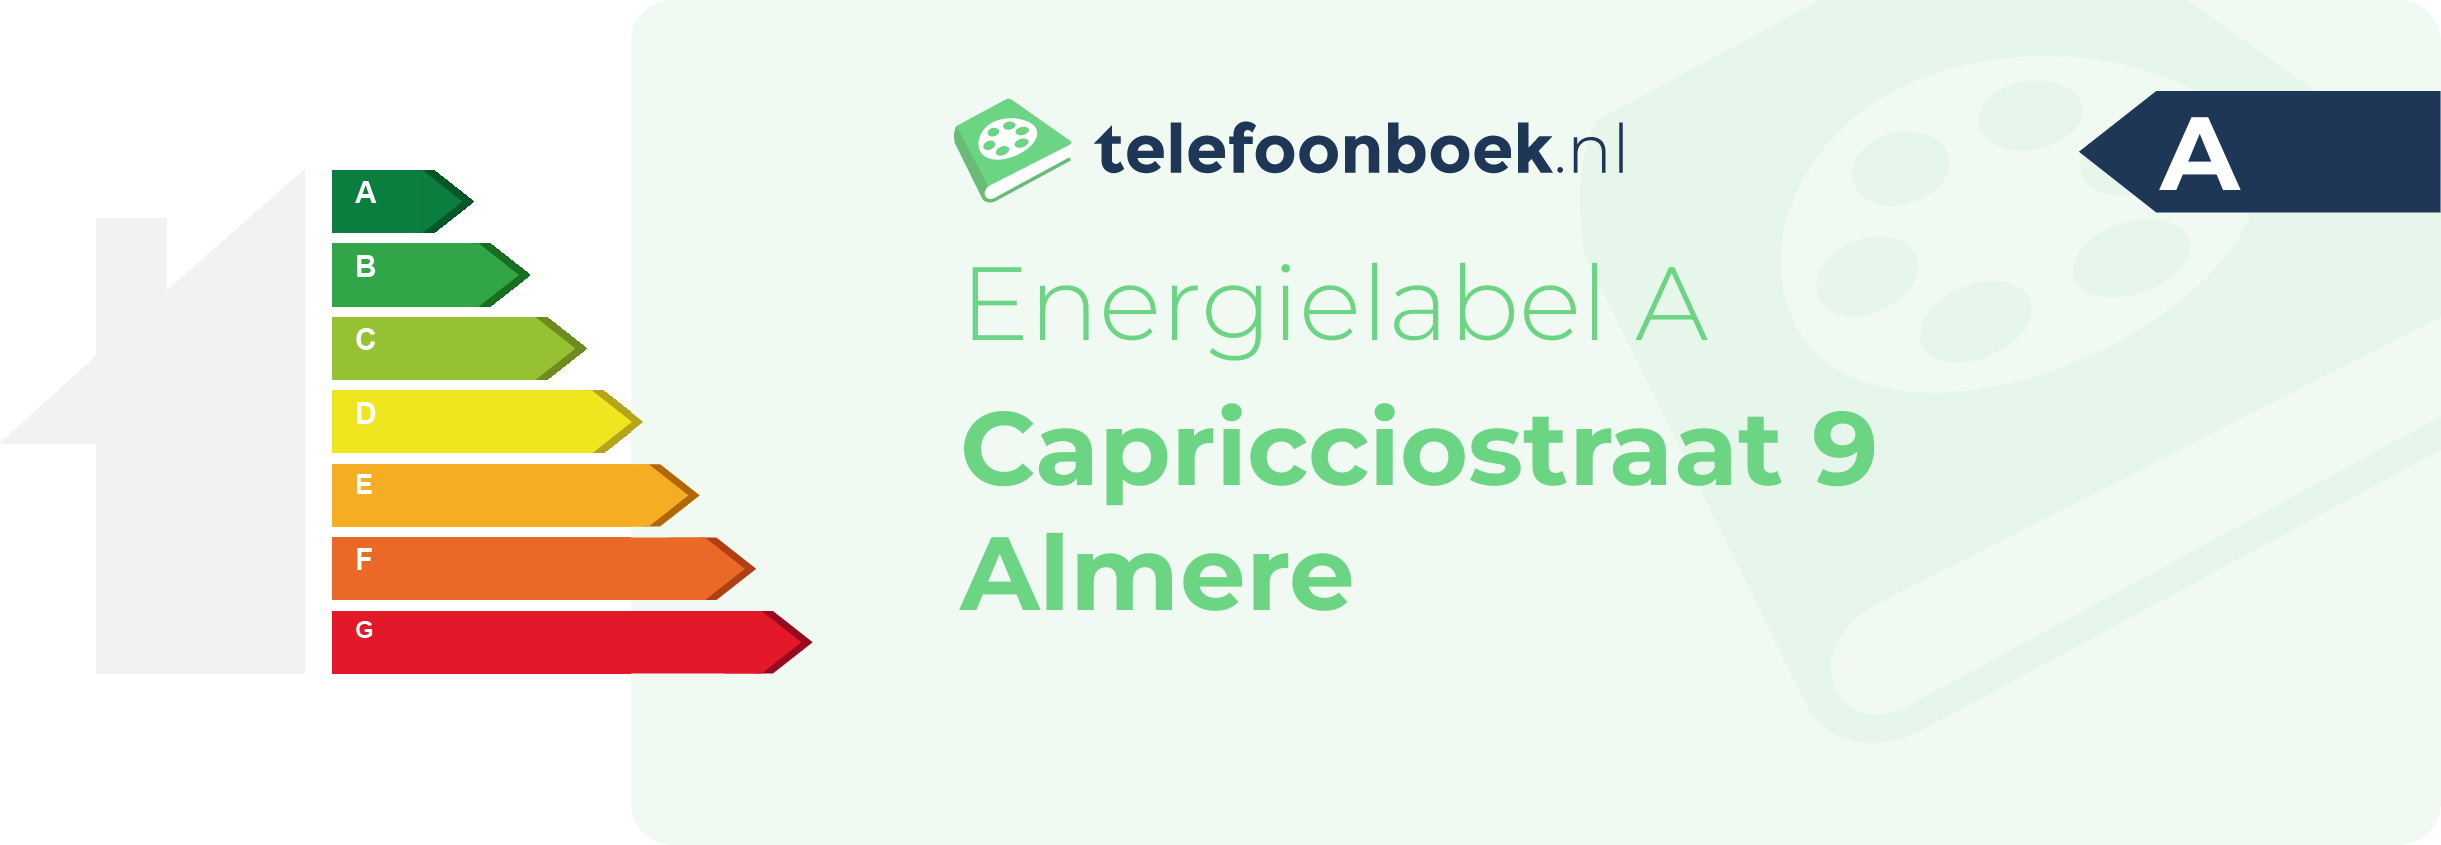 Energielabel Capricciostraat 9 Almere